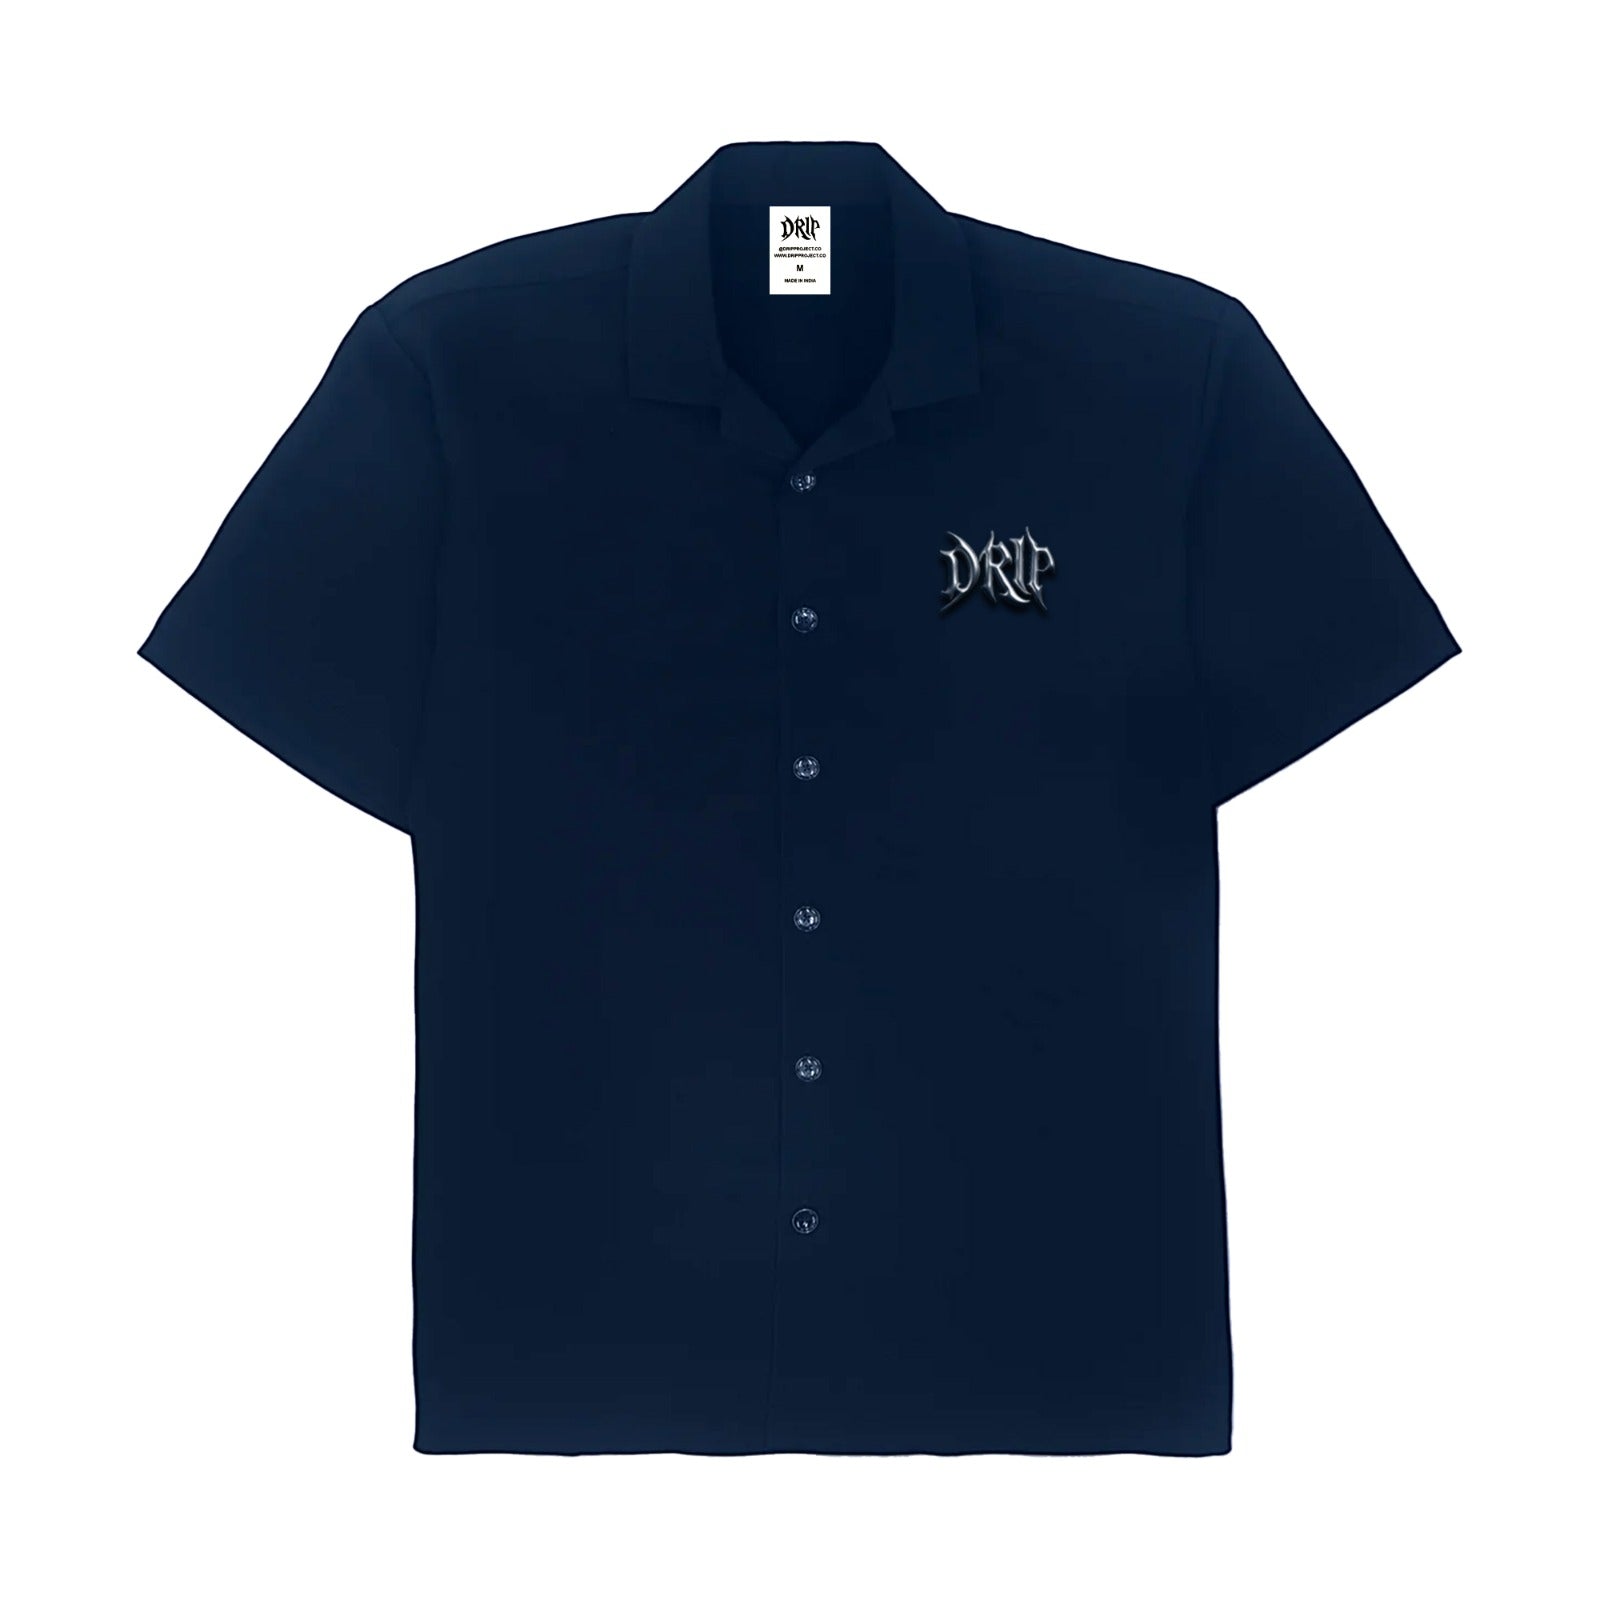 Bowling shirt in Navy Blue